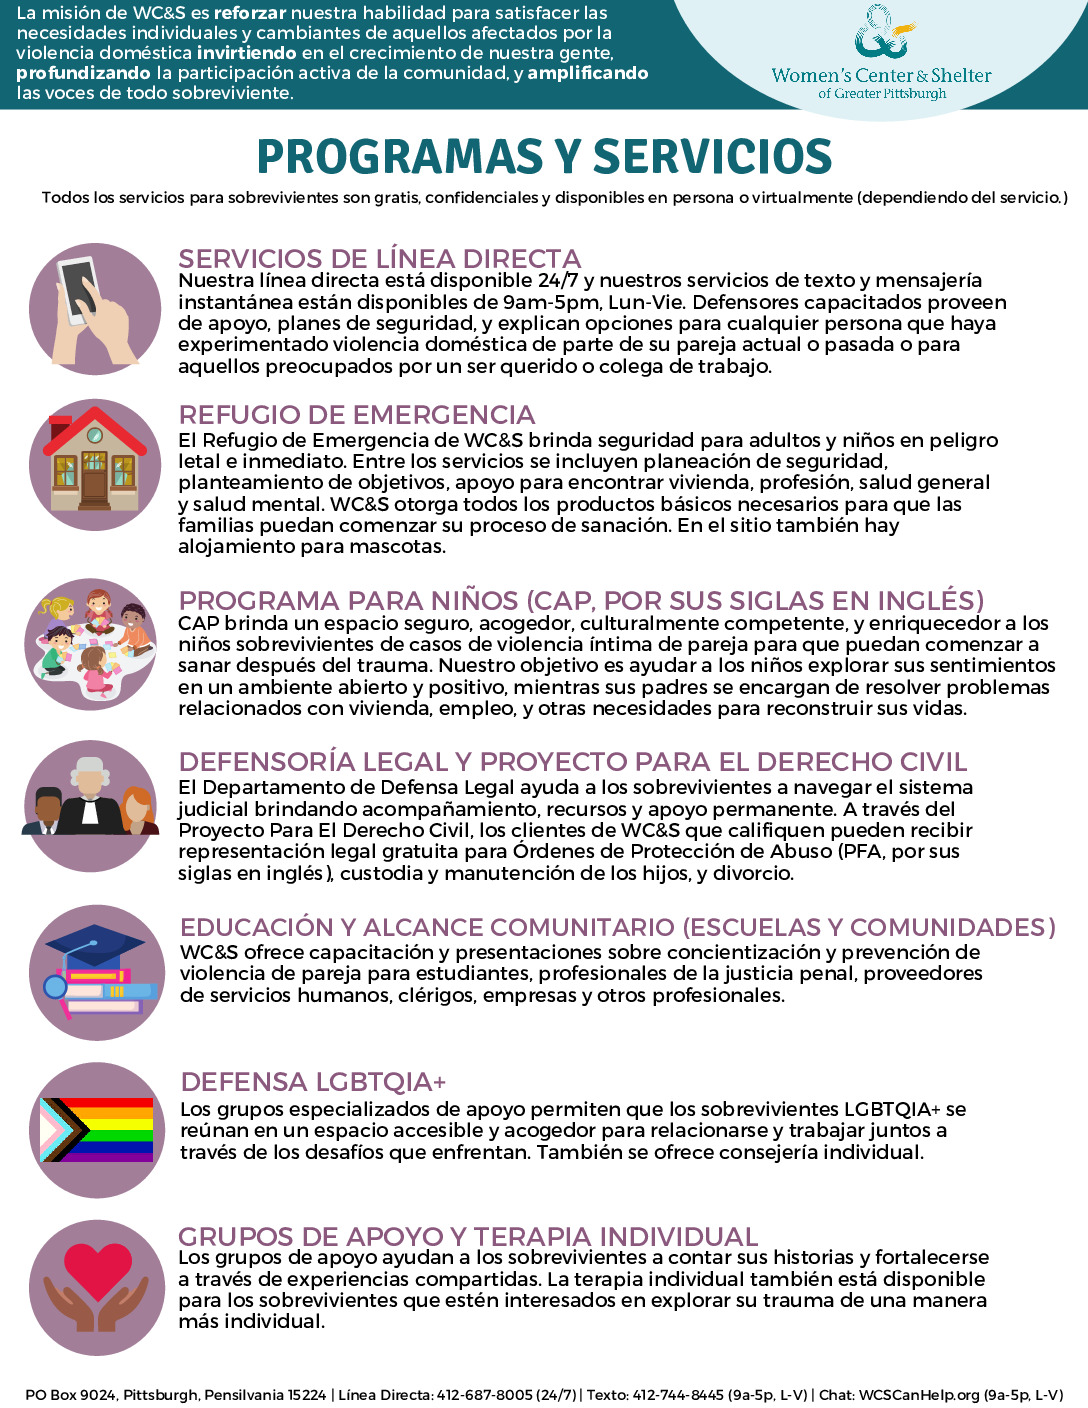 Programs & Services Flyer Spanish